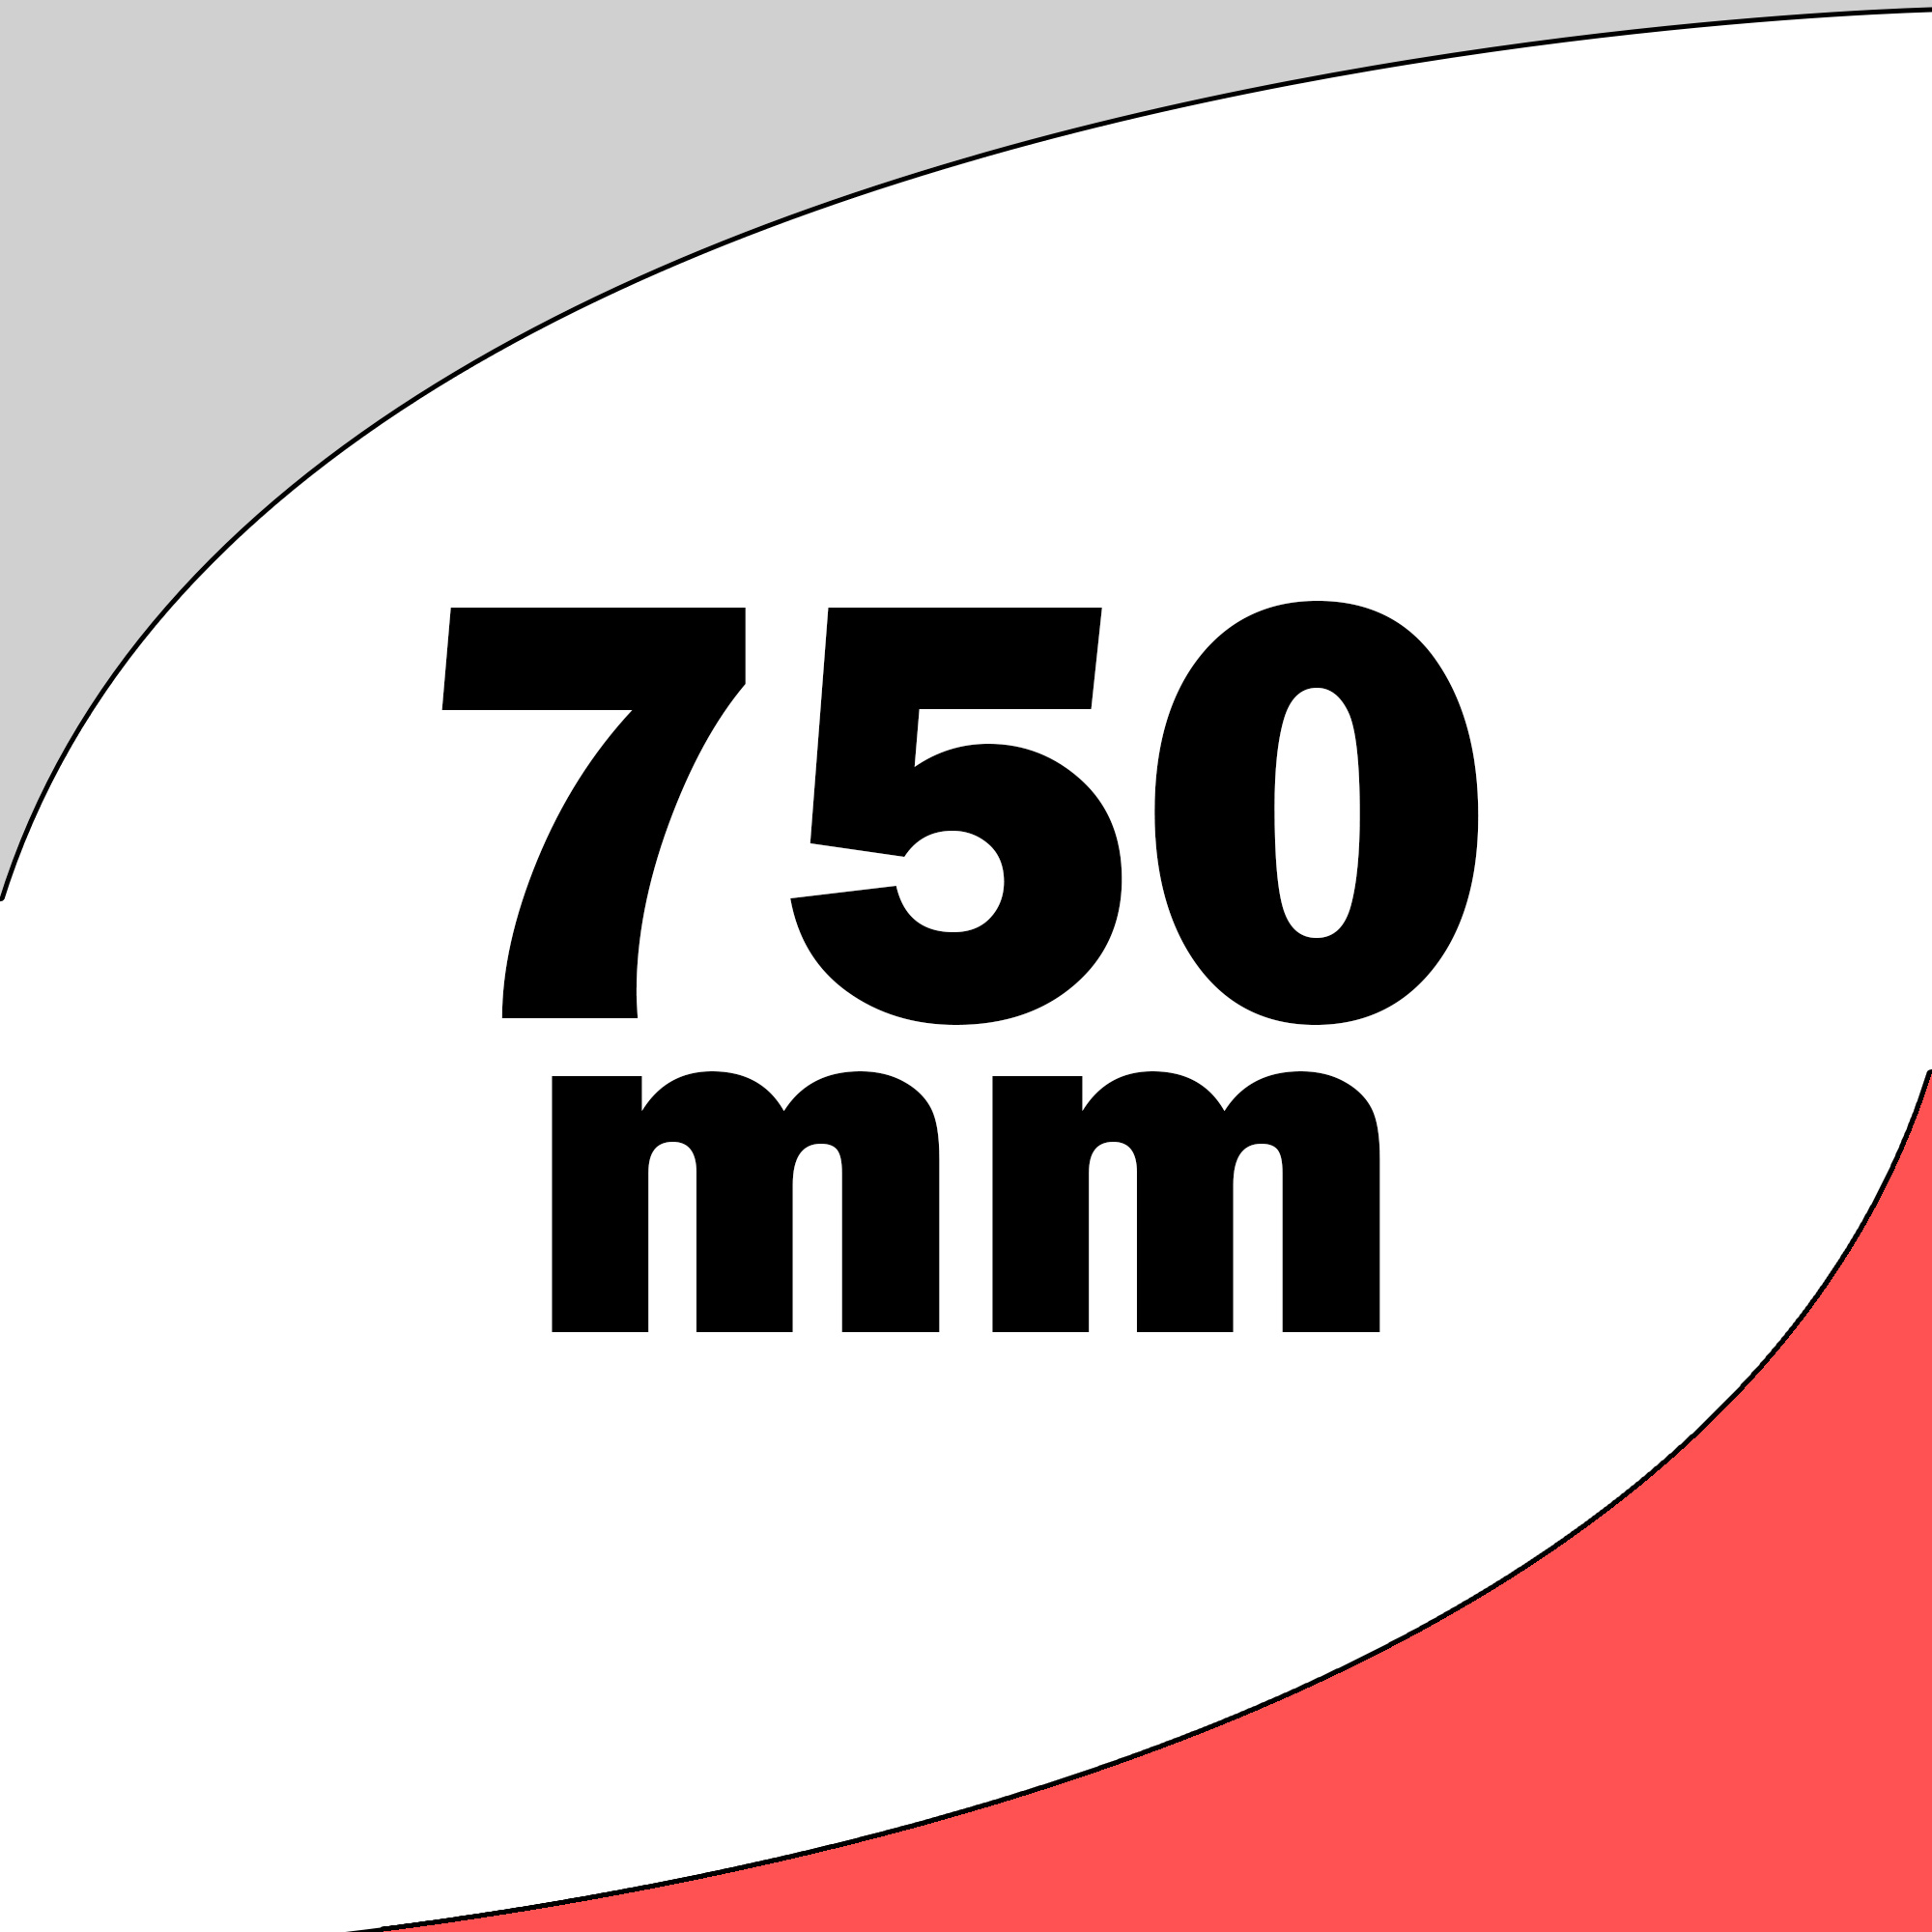 750 mm